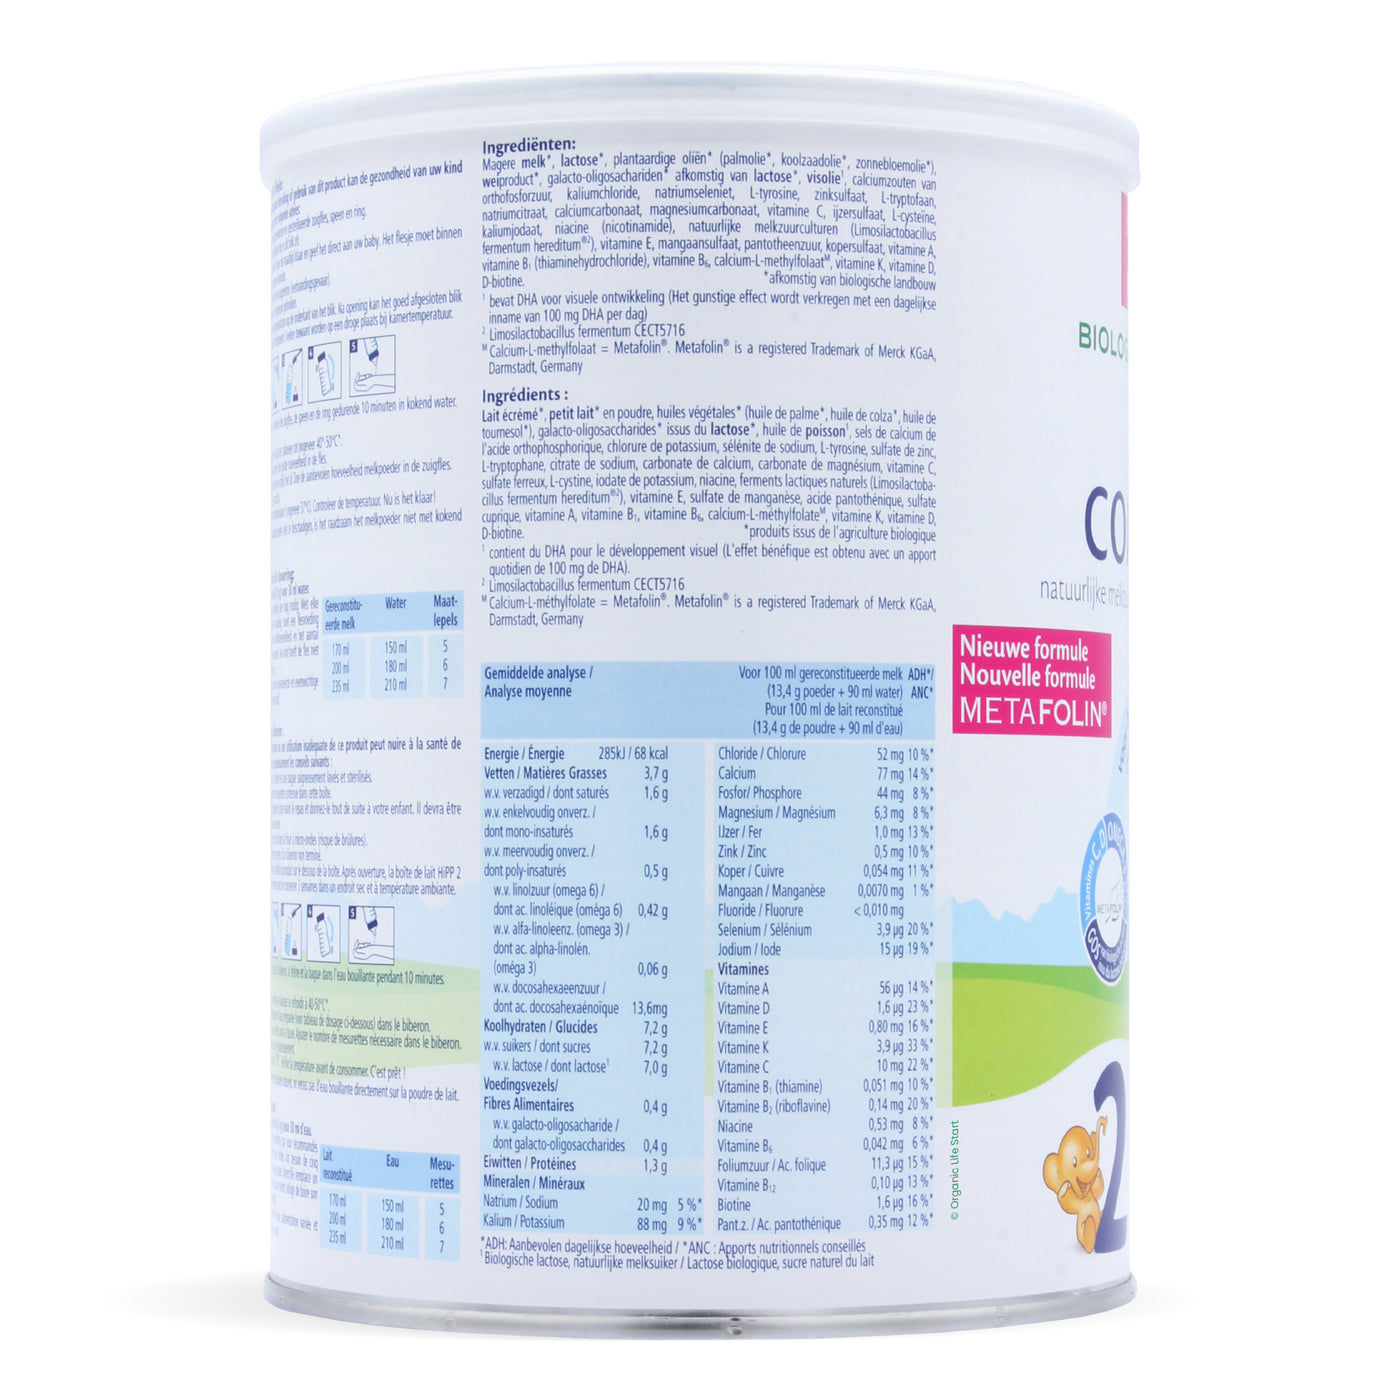 HiPP Stage 2 Organic Combiotic Formula (300g)